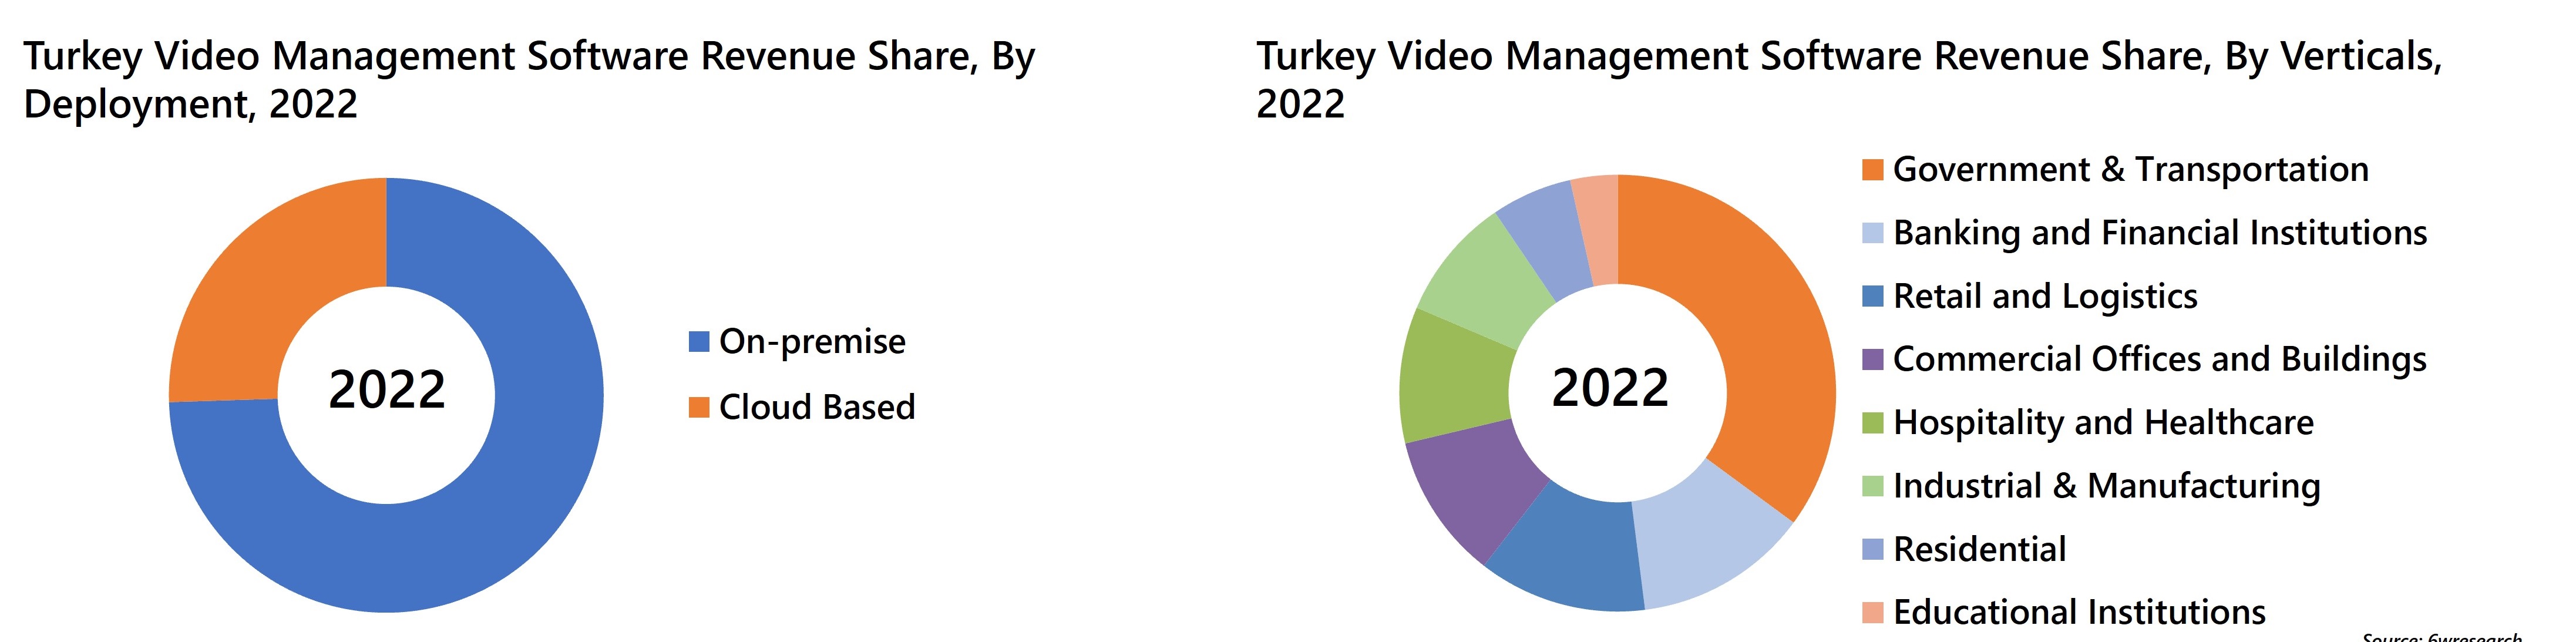 Turkey Video Management Software Revenue Share